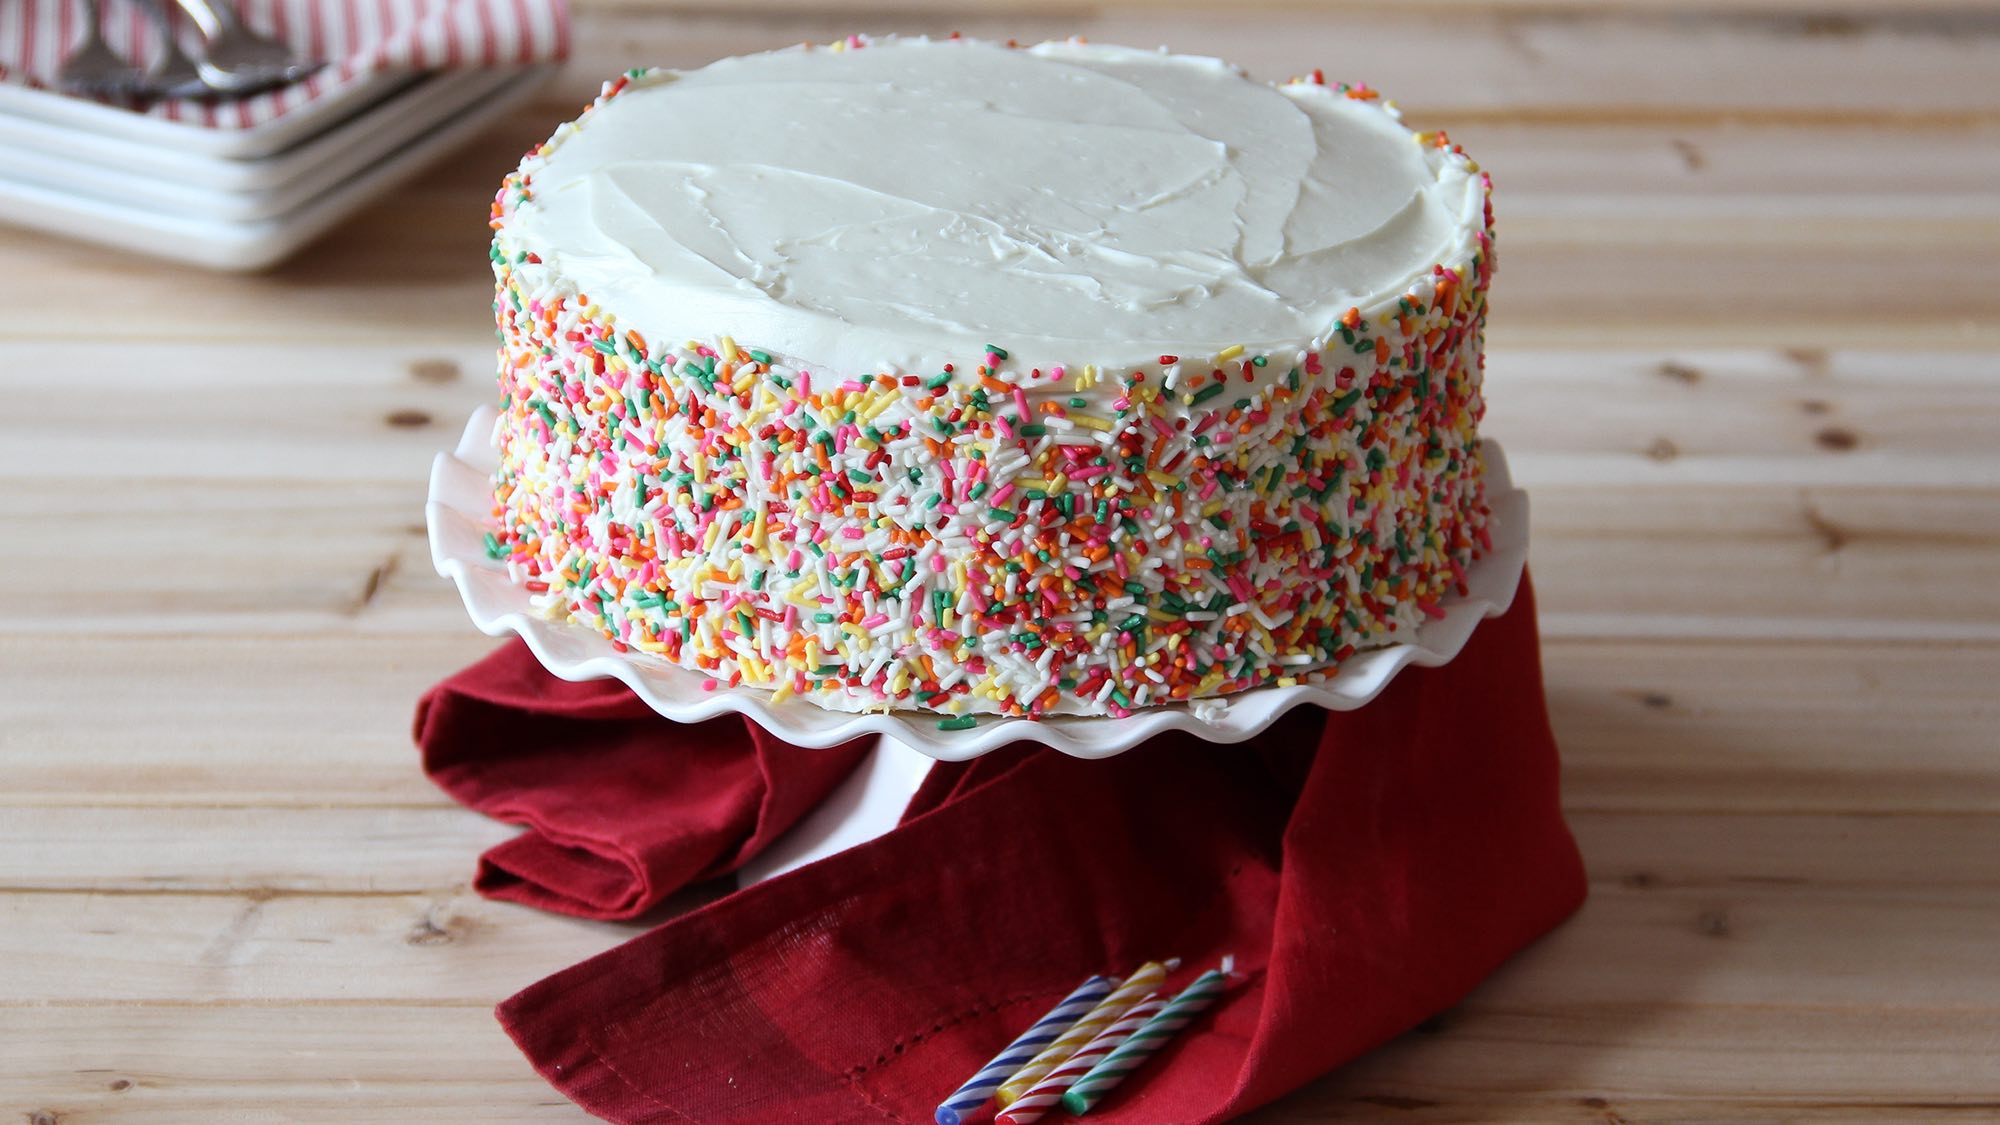 vanilla-birthday-cake-baked-by-rachel.jpg